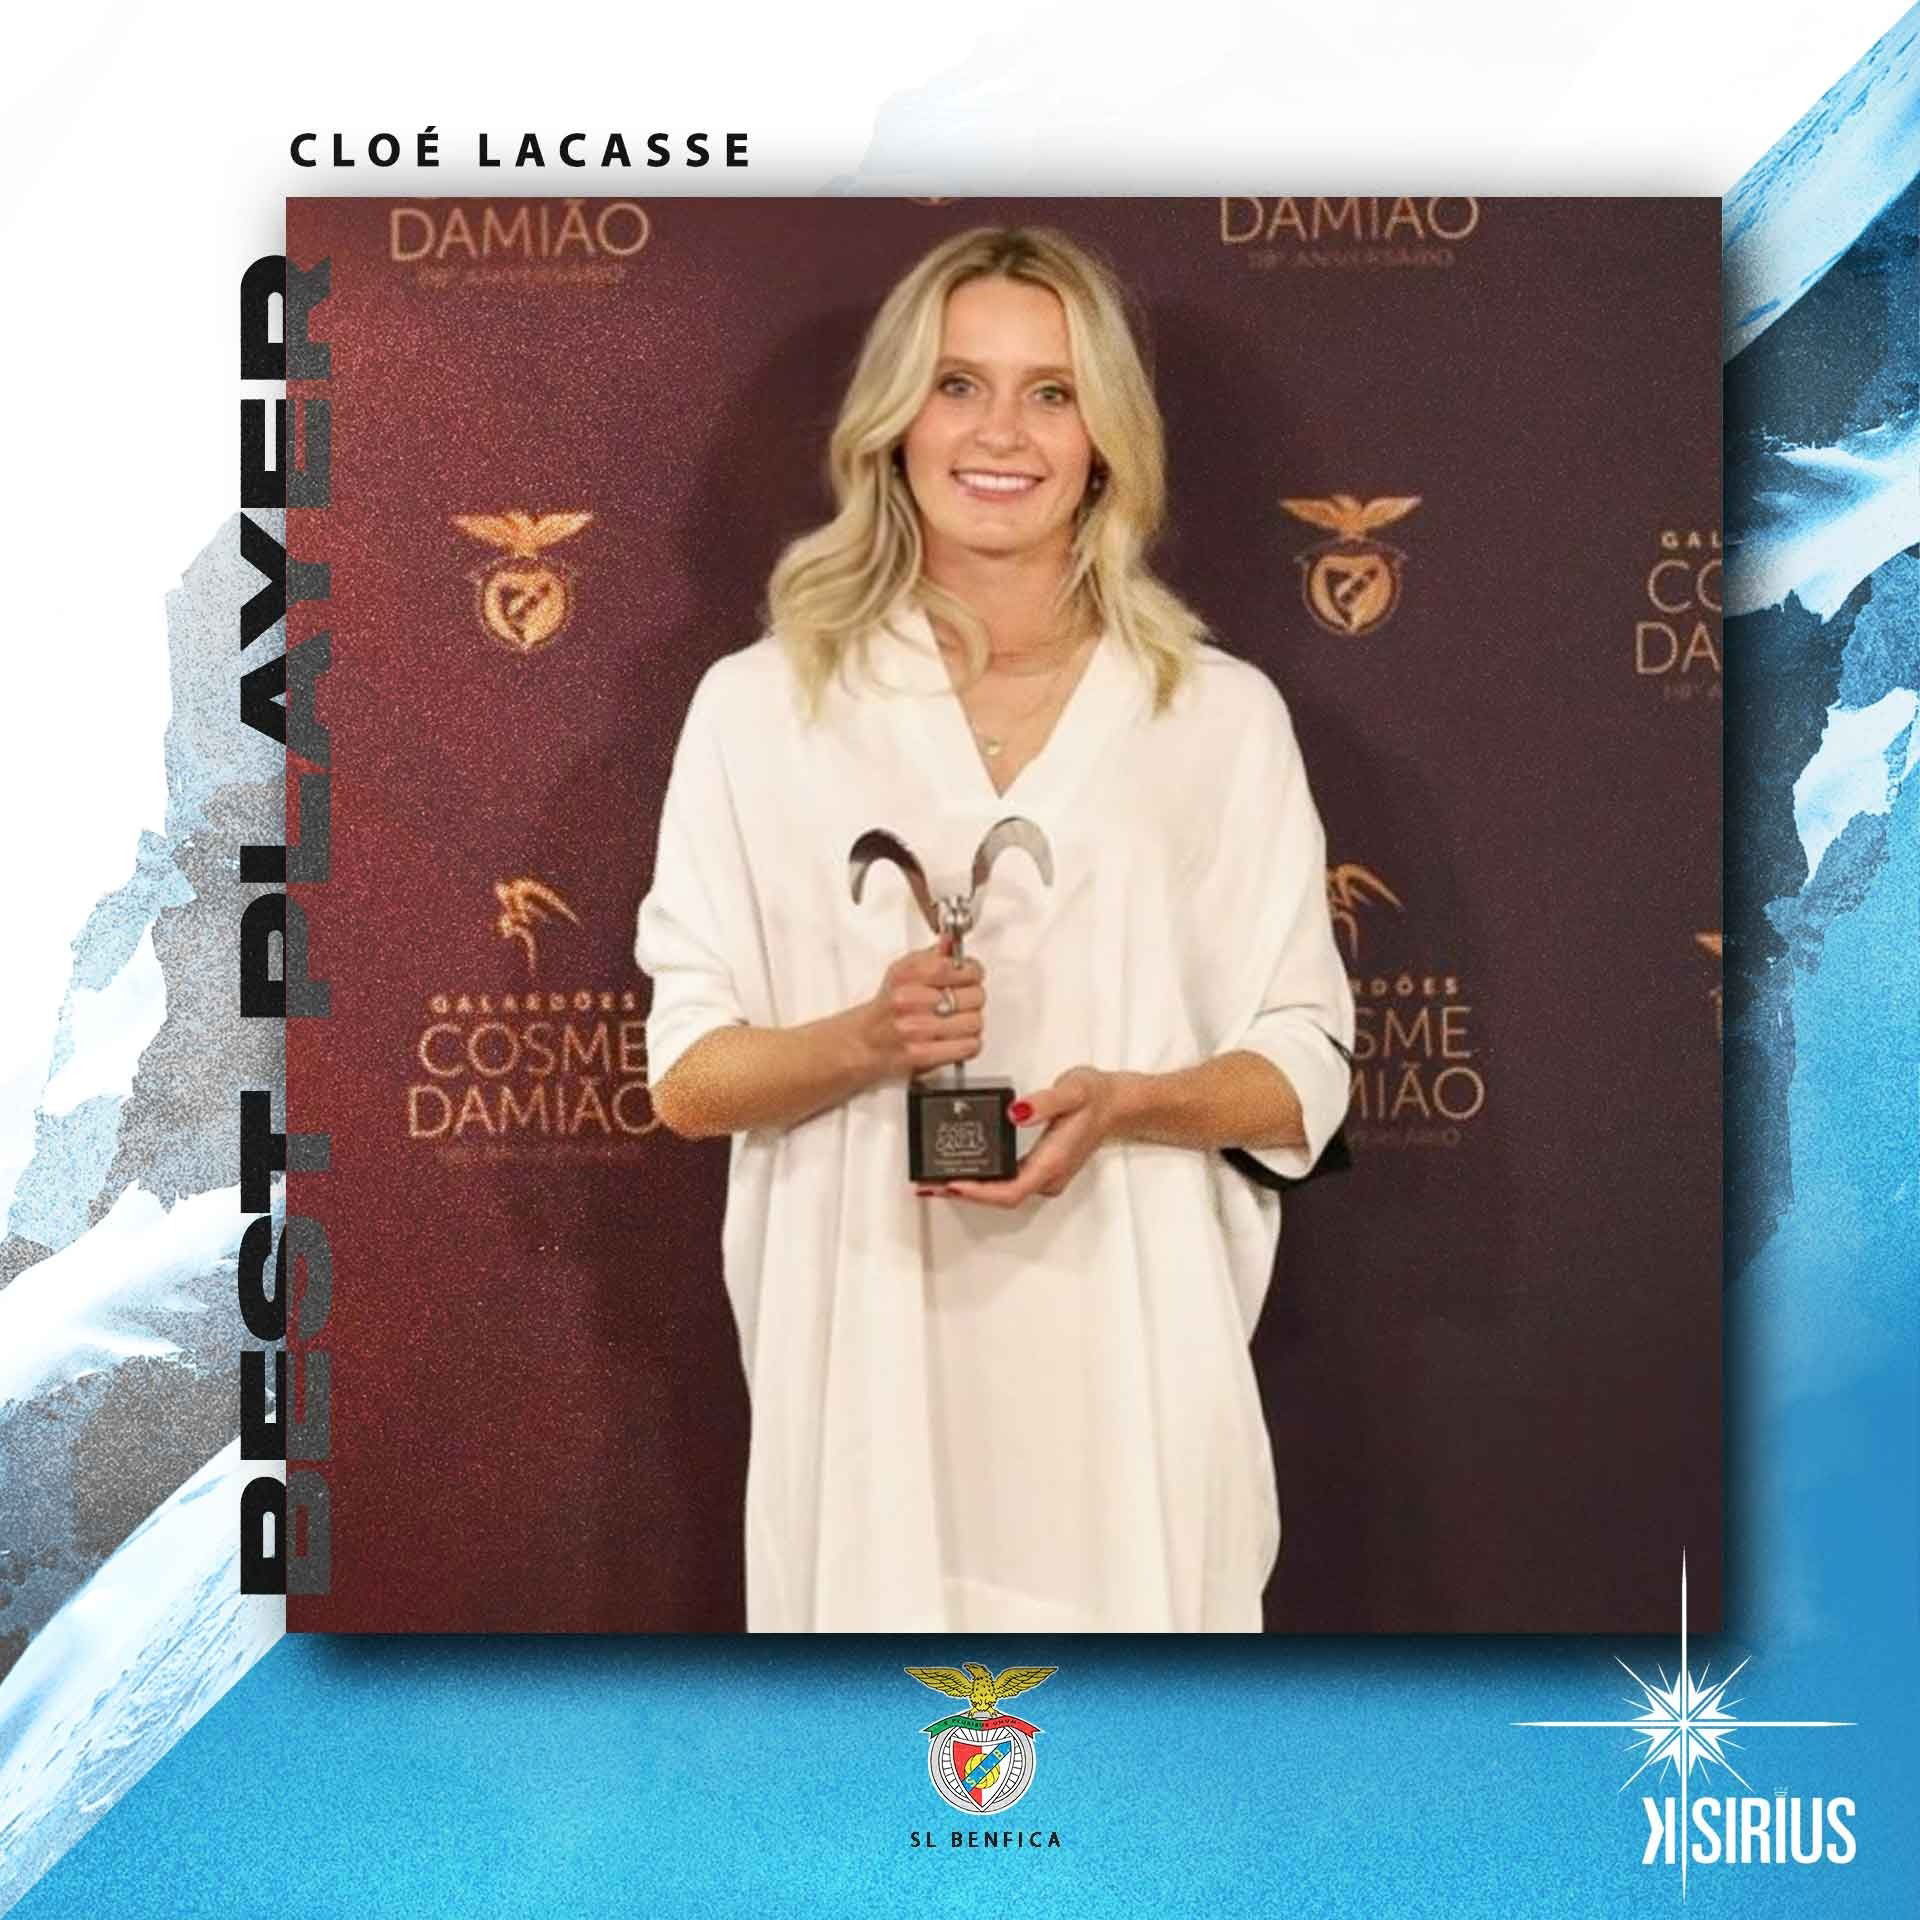 Best Player: Cloé Lacasse (SL Benfica)